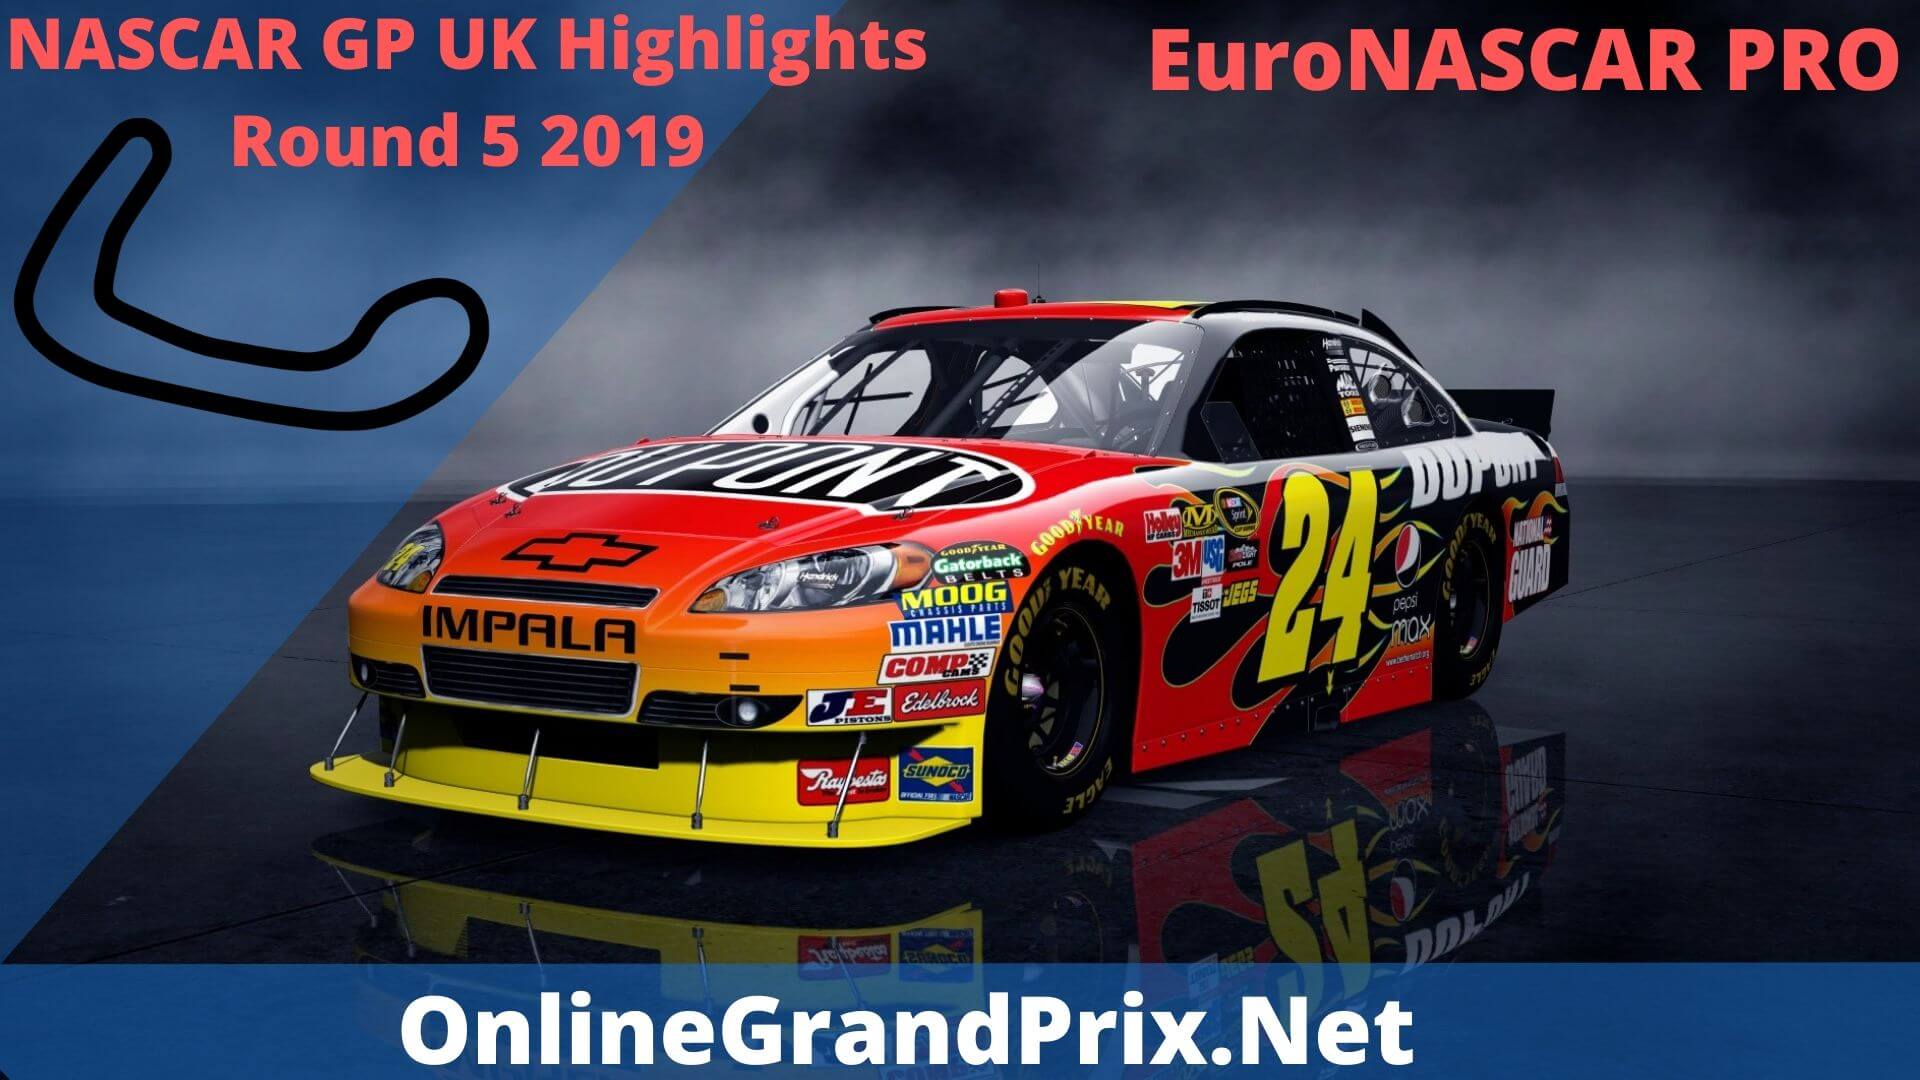 NASCAR GP UK Round 5 Highlights 2019